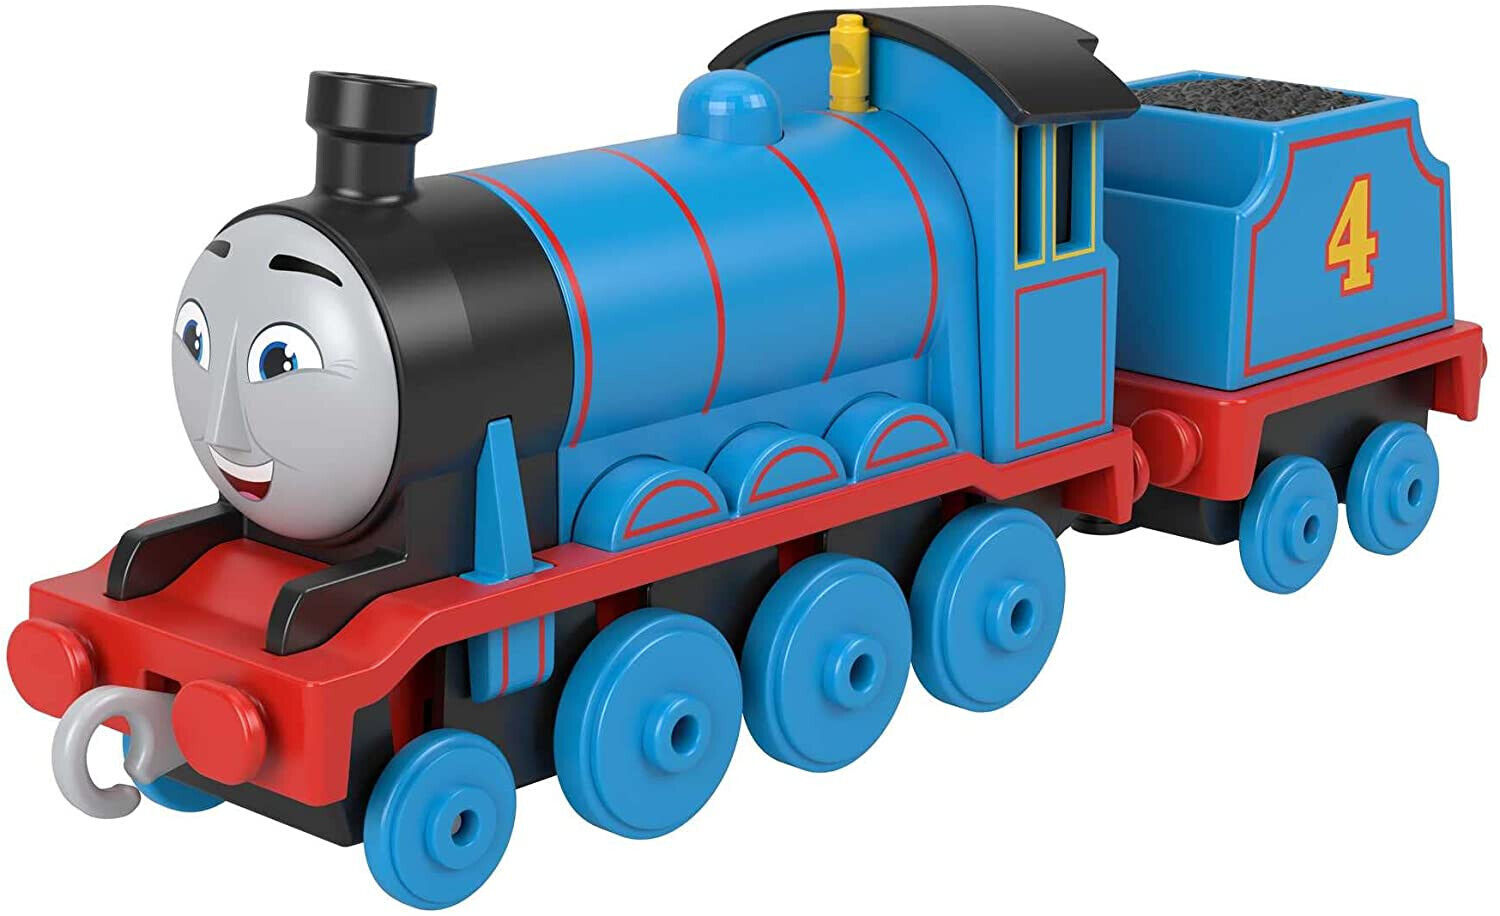 NEW Mattel Thomas & Friends Large Push Along Gordon Toy - 2023 Must-Have!